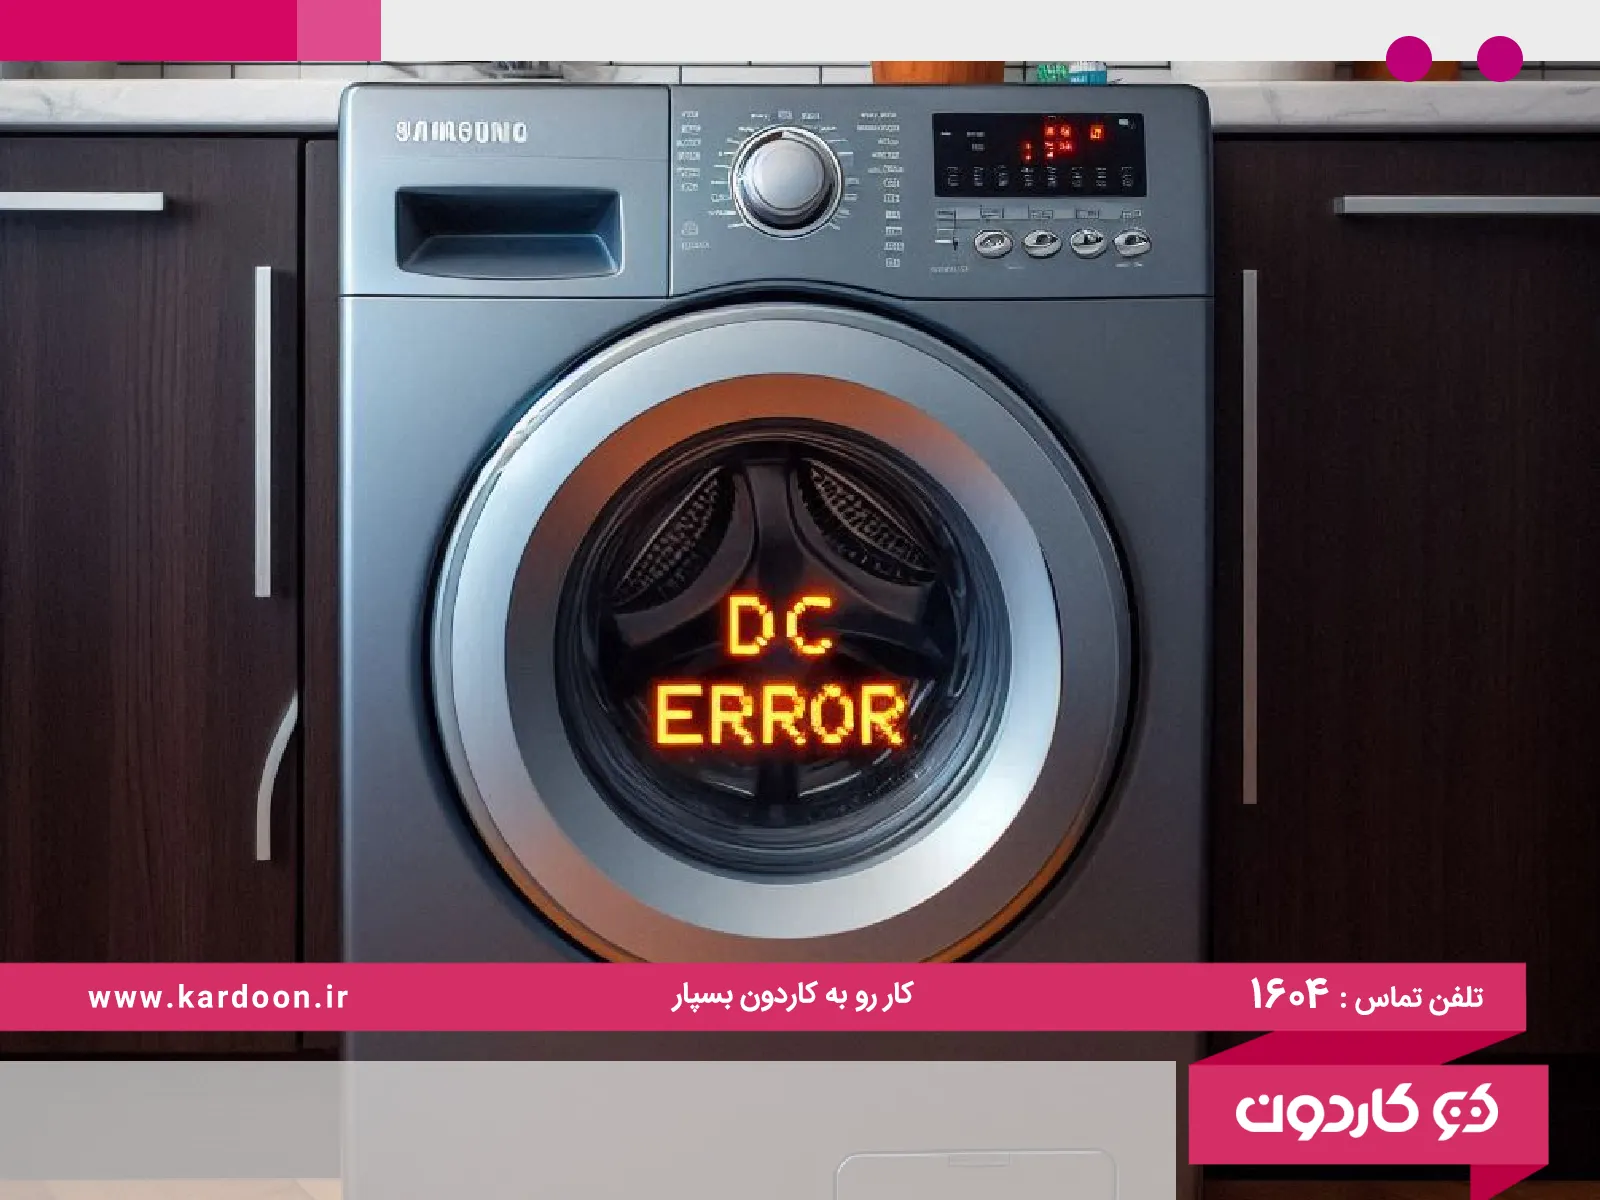 The cause of the Samsung washing machine dc error